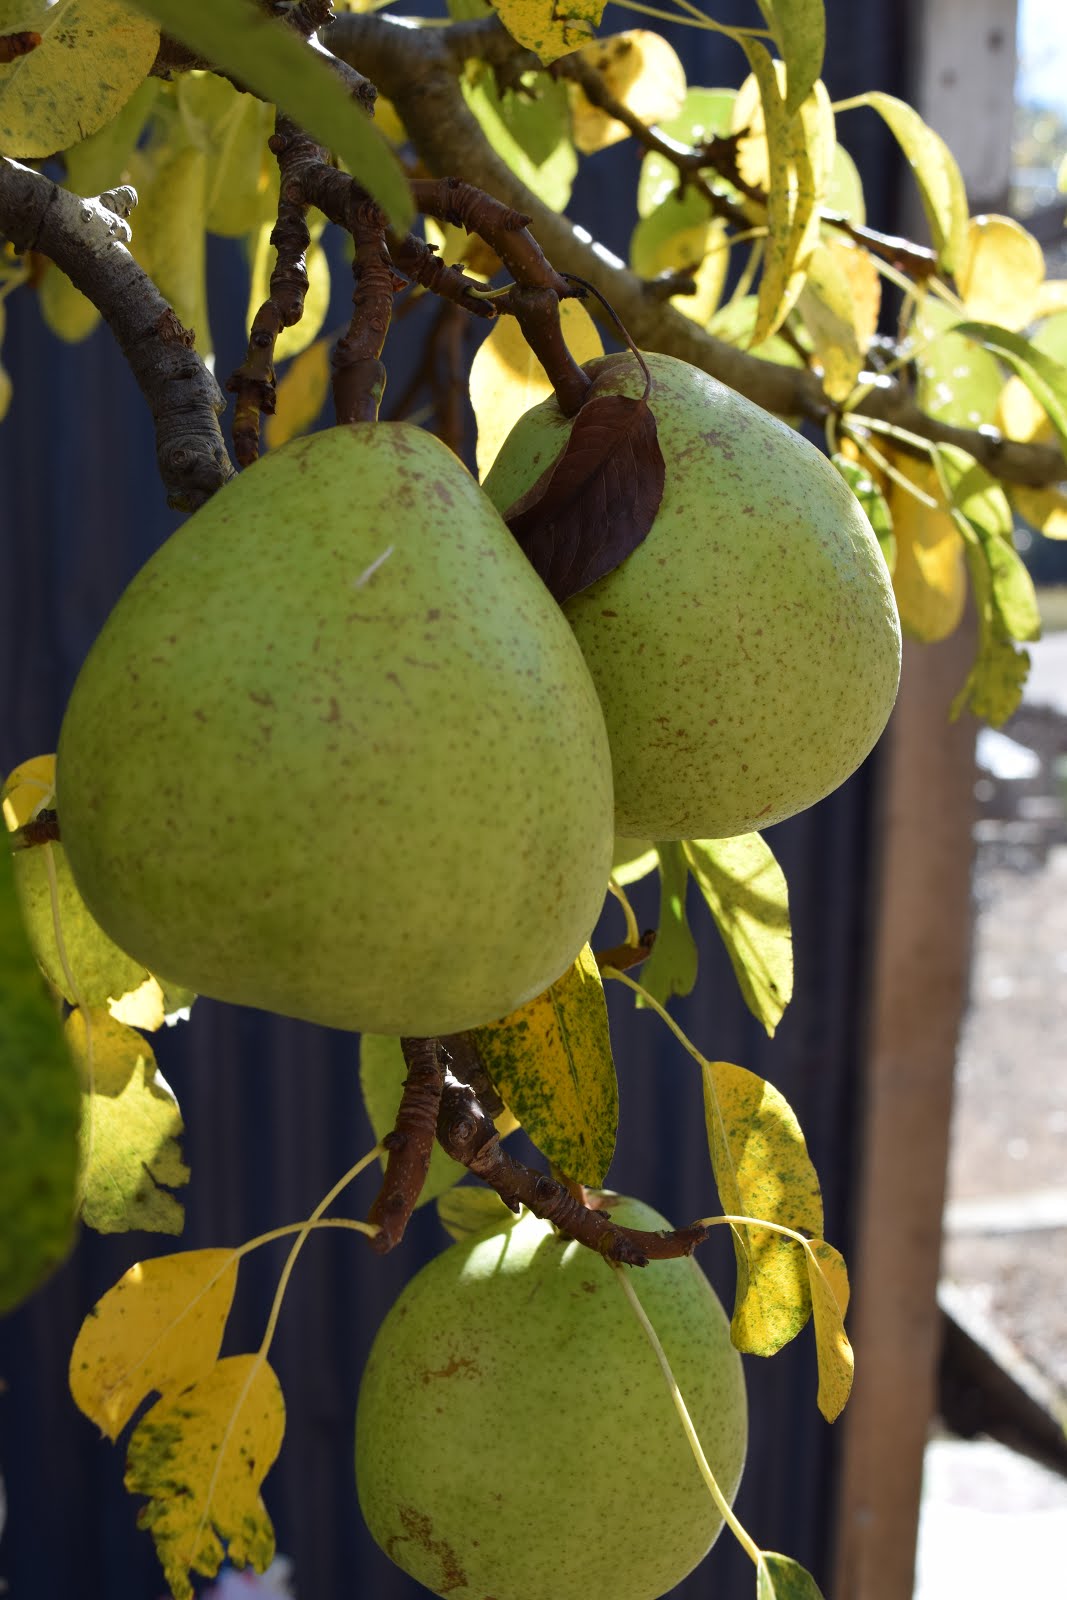 Winter pears